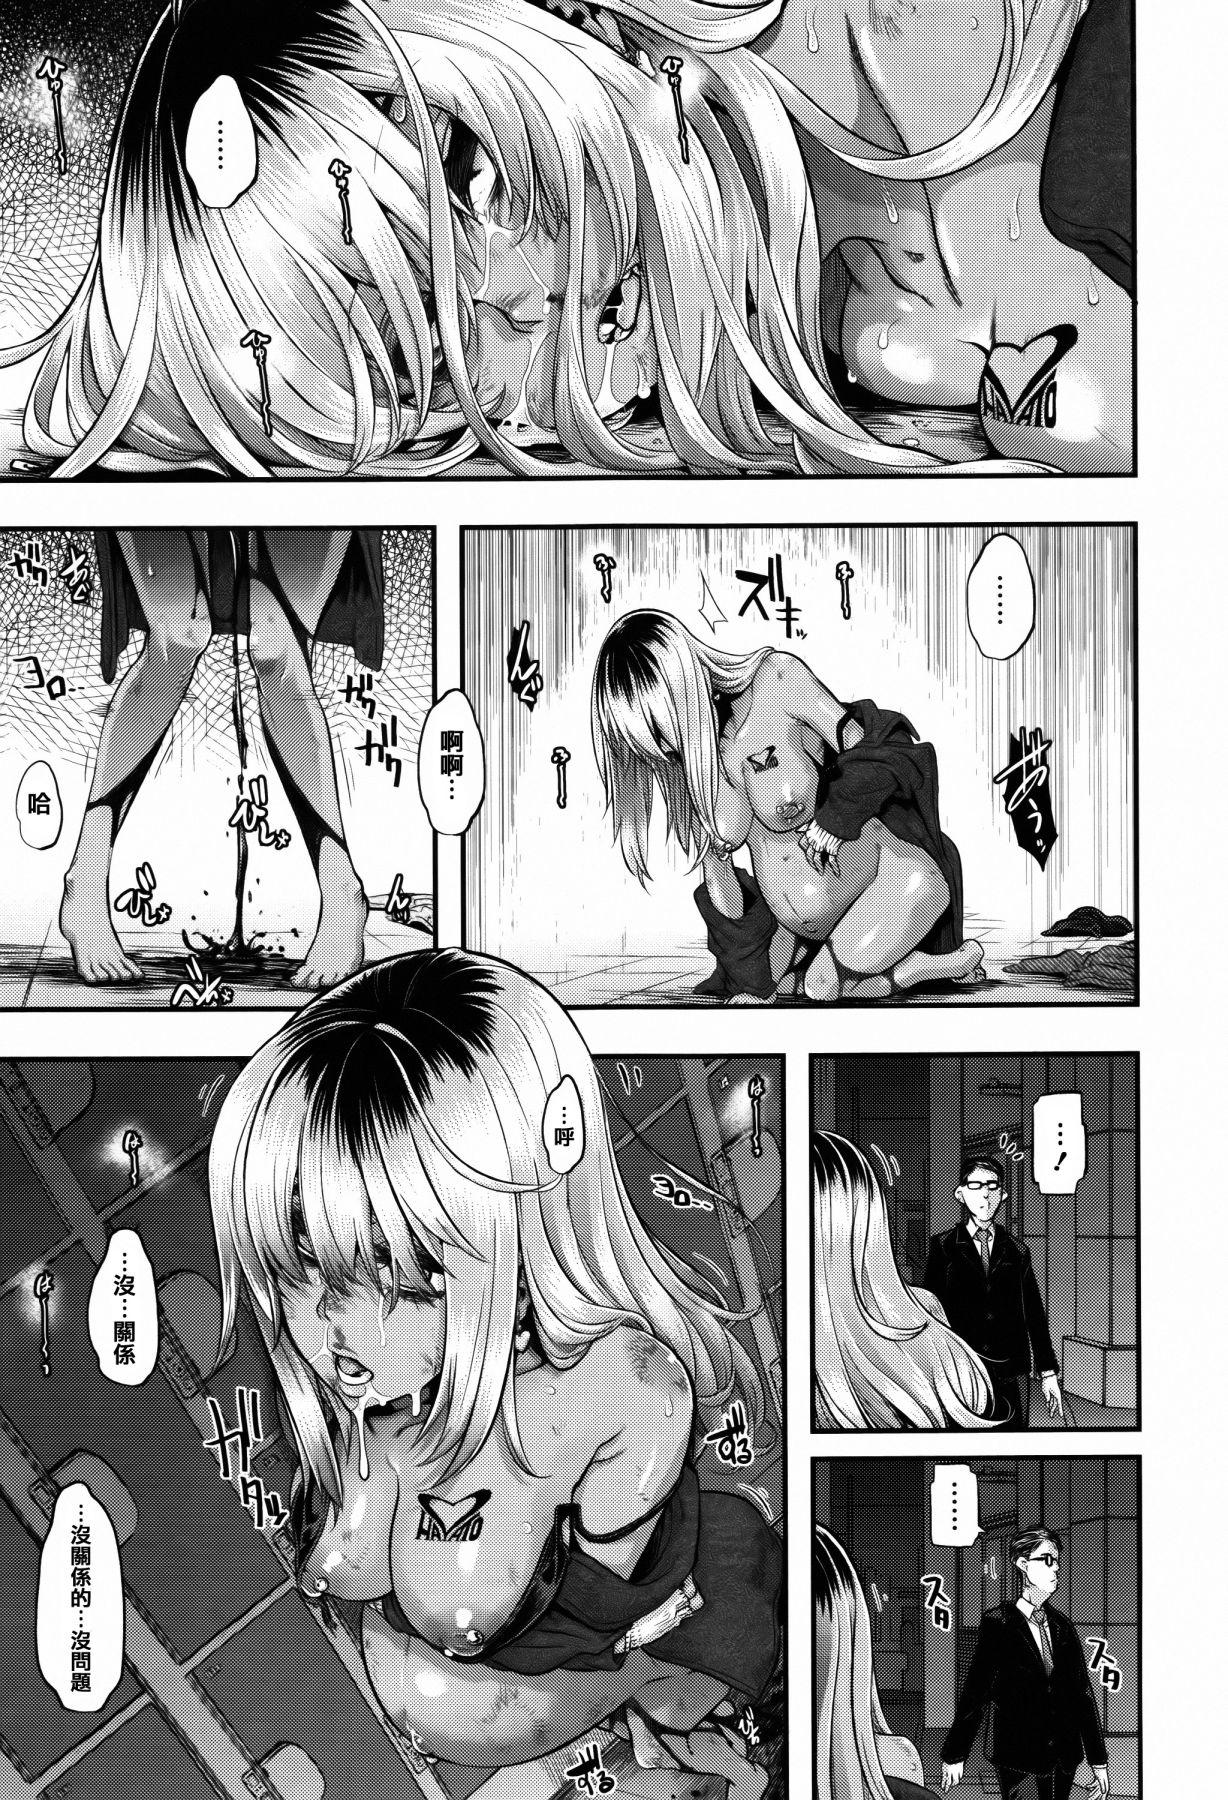 256 uncensored hentai, 変身 + 4Pリーフレット Page 239 Of 256 hentai manga, 変身 + 4Pリ...